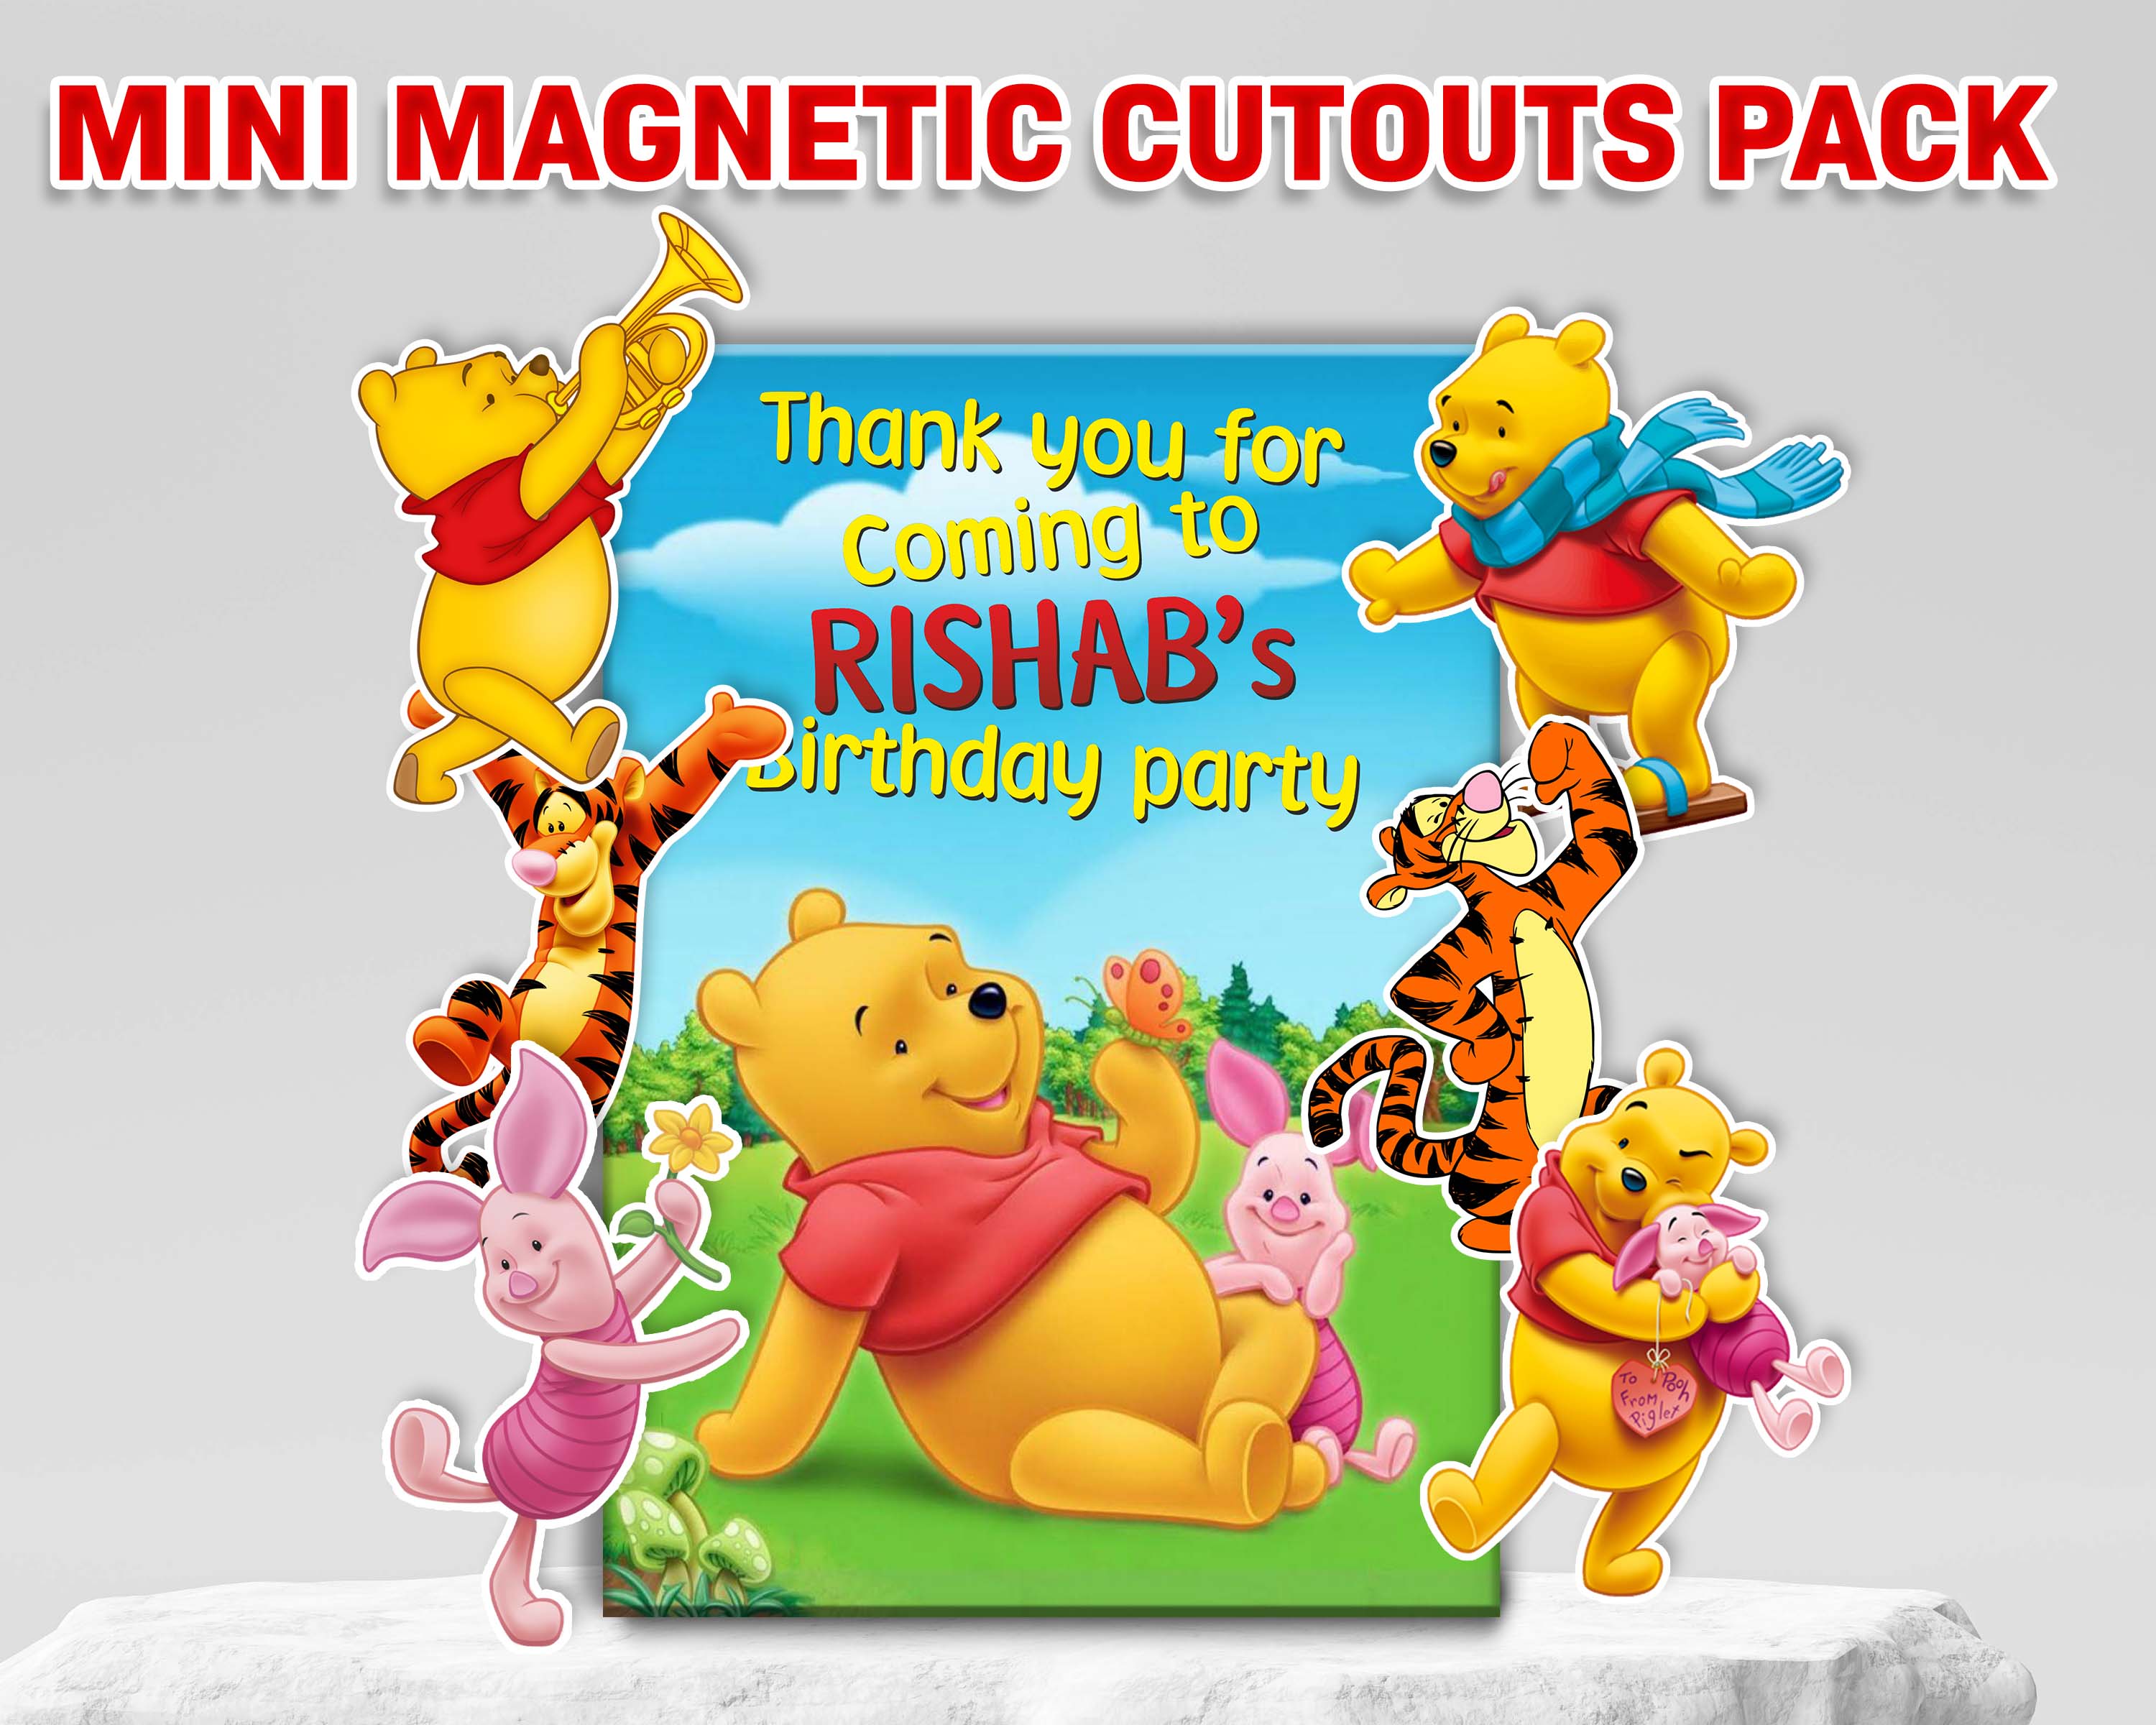 Winnie Pooh Stuffed Animals Original | Roo Winnie Pooh Stuffed Animal -  Free Shipping - Aliexpress